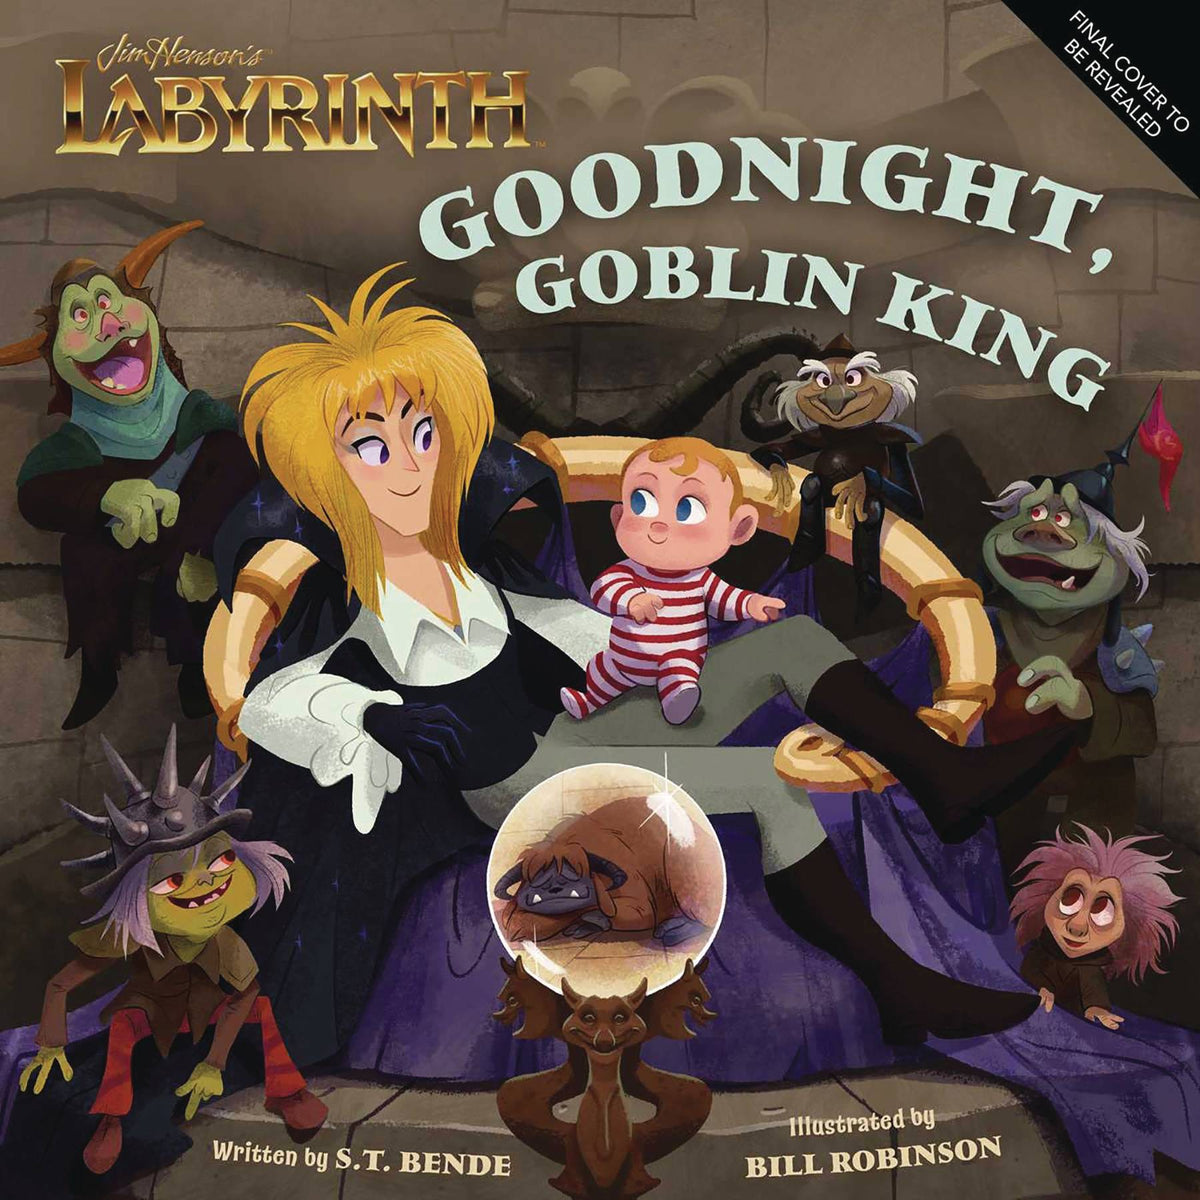 Jim Hensons Labyrinth Goodnight Goblin King HC